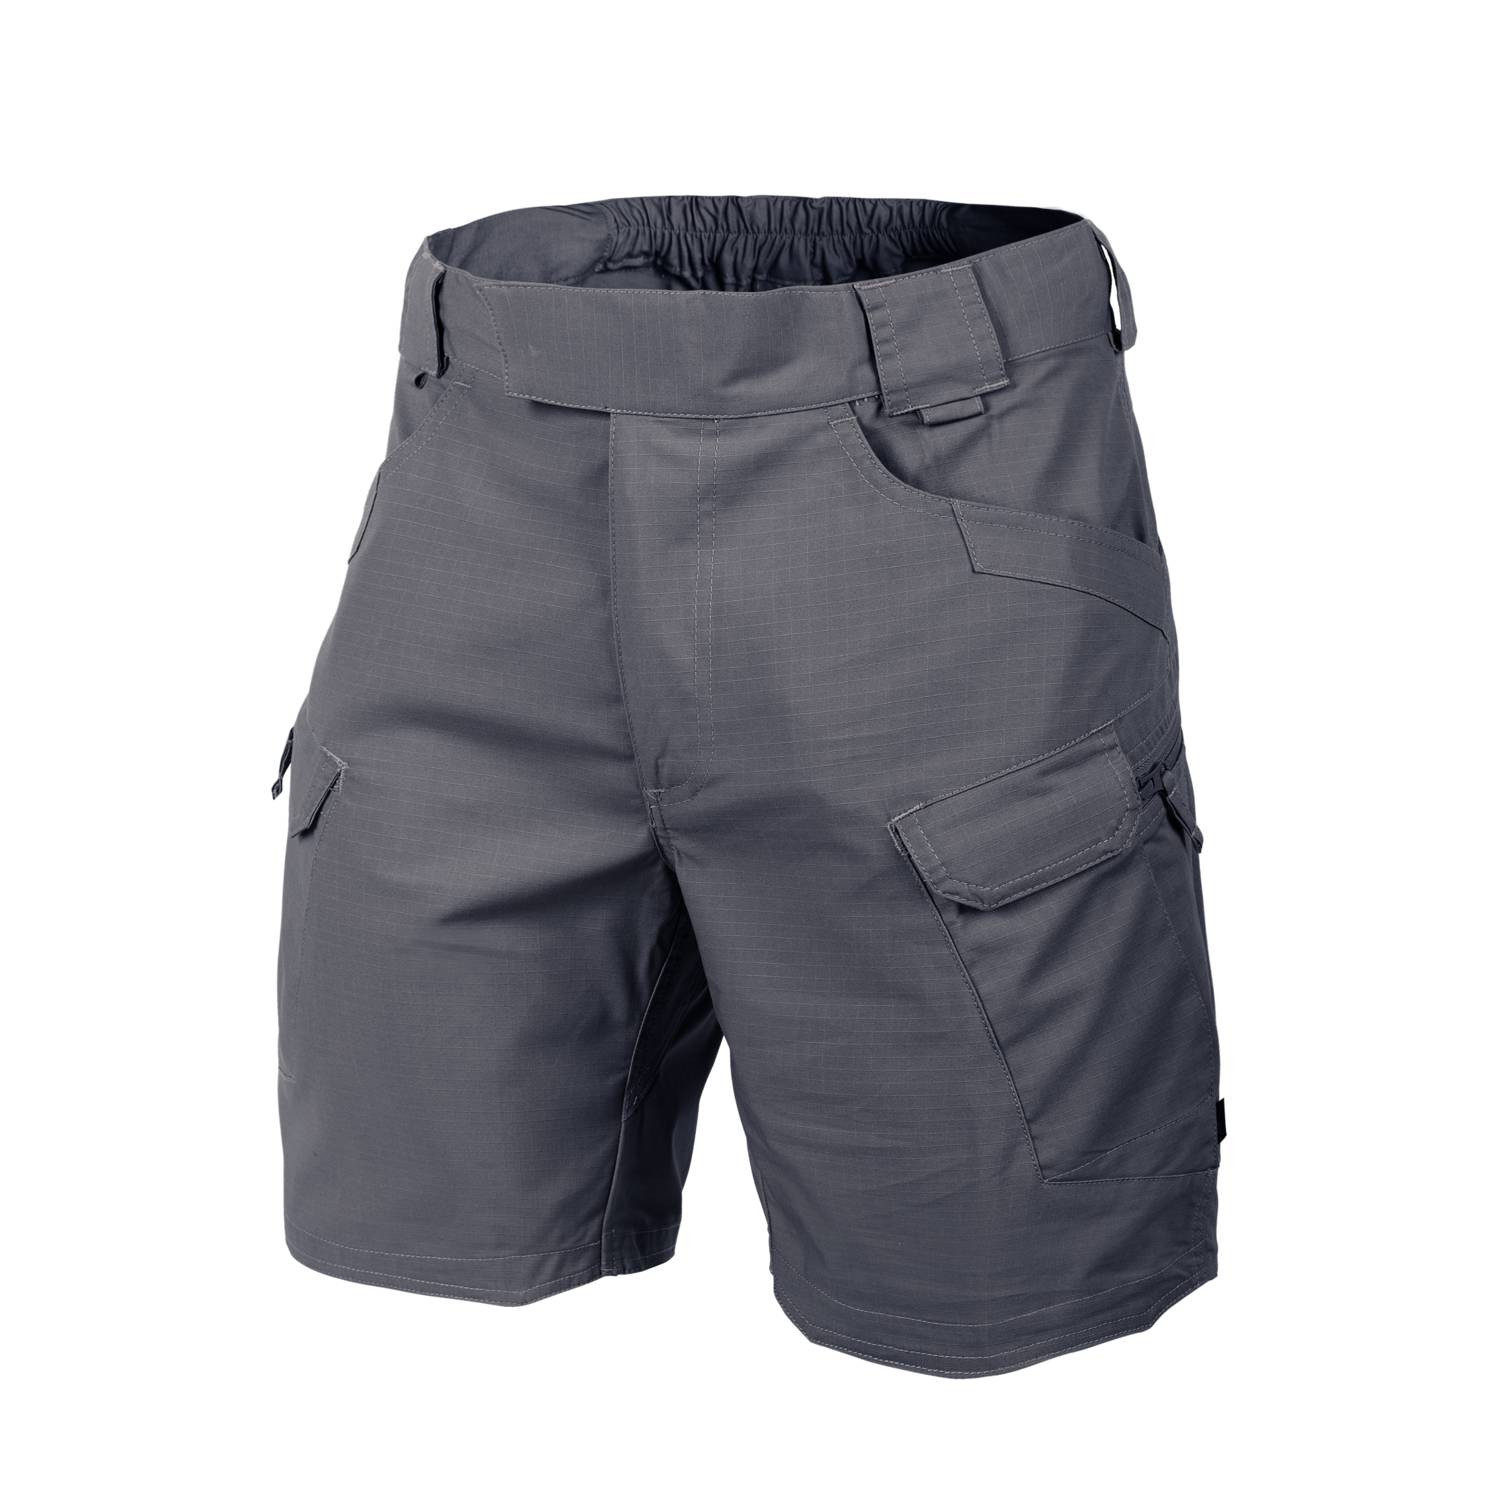 UTS (Urban Tactical Shorts) 8.5 ® - PolyCotton Ripstop - Helikon Tex